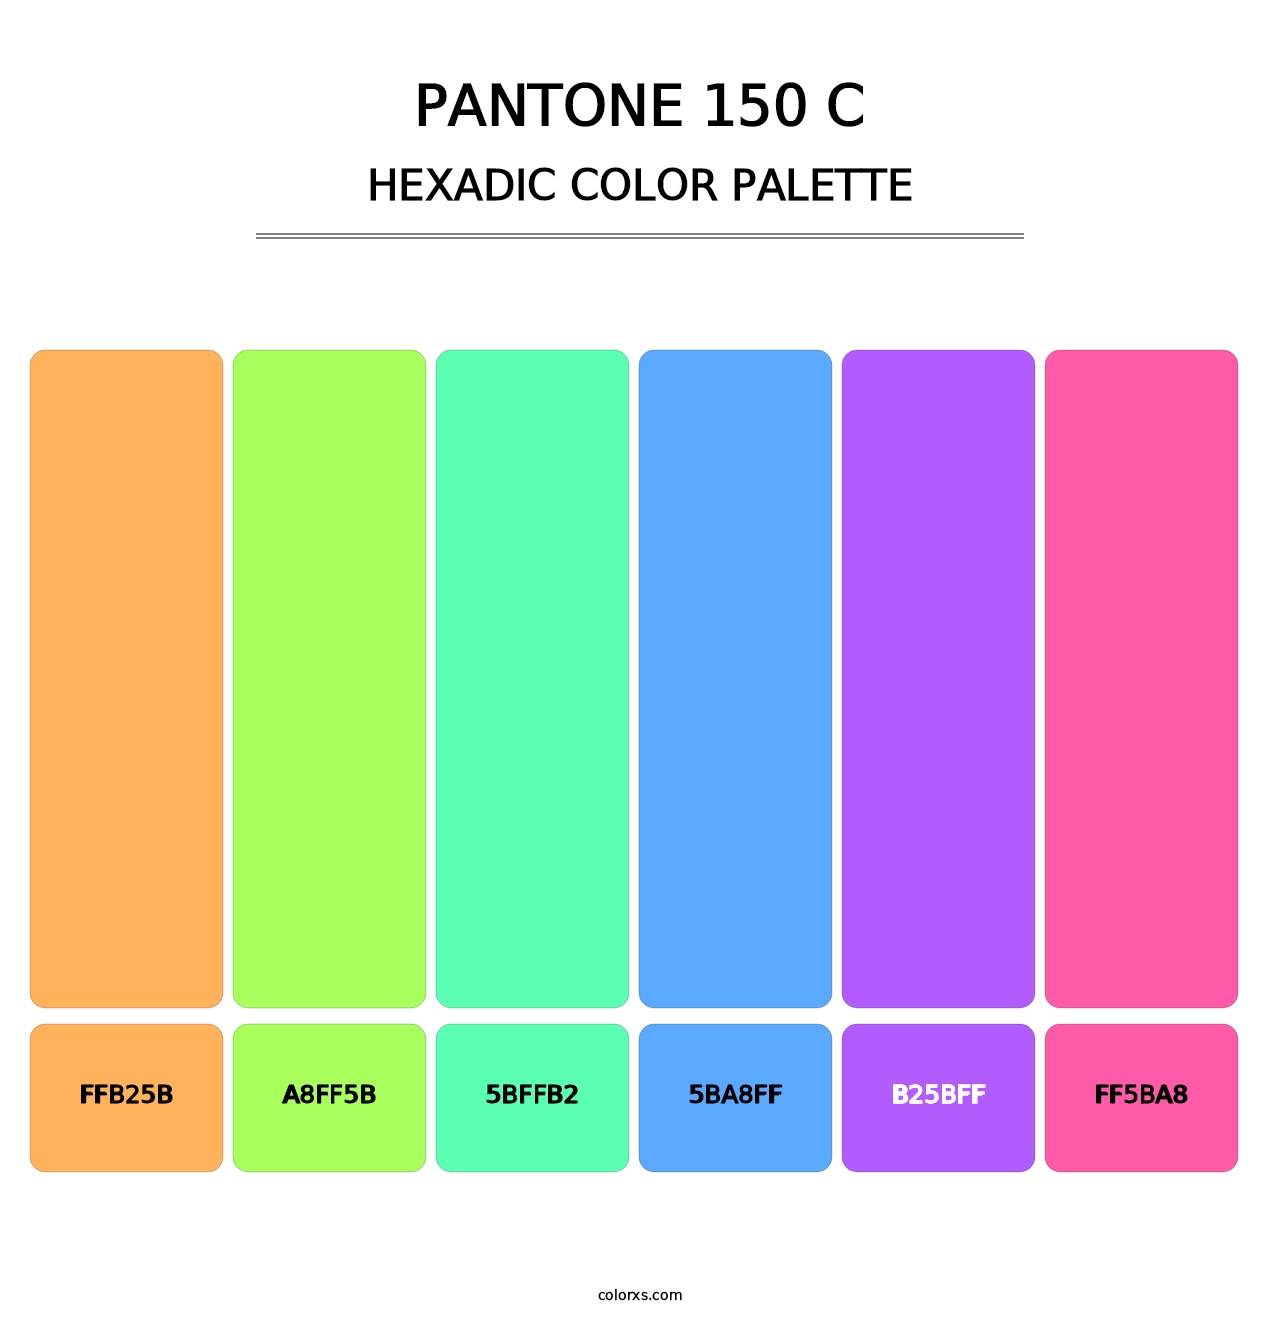 PANTONE 150 C - Hexadic Color Palette